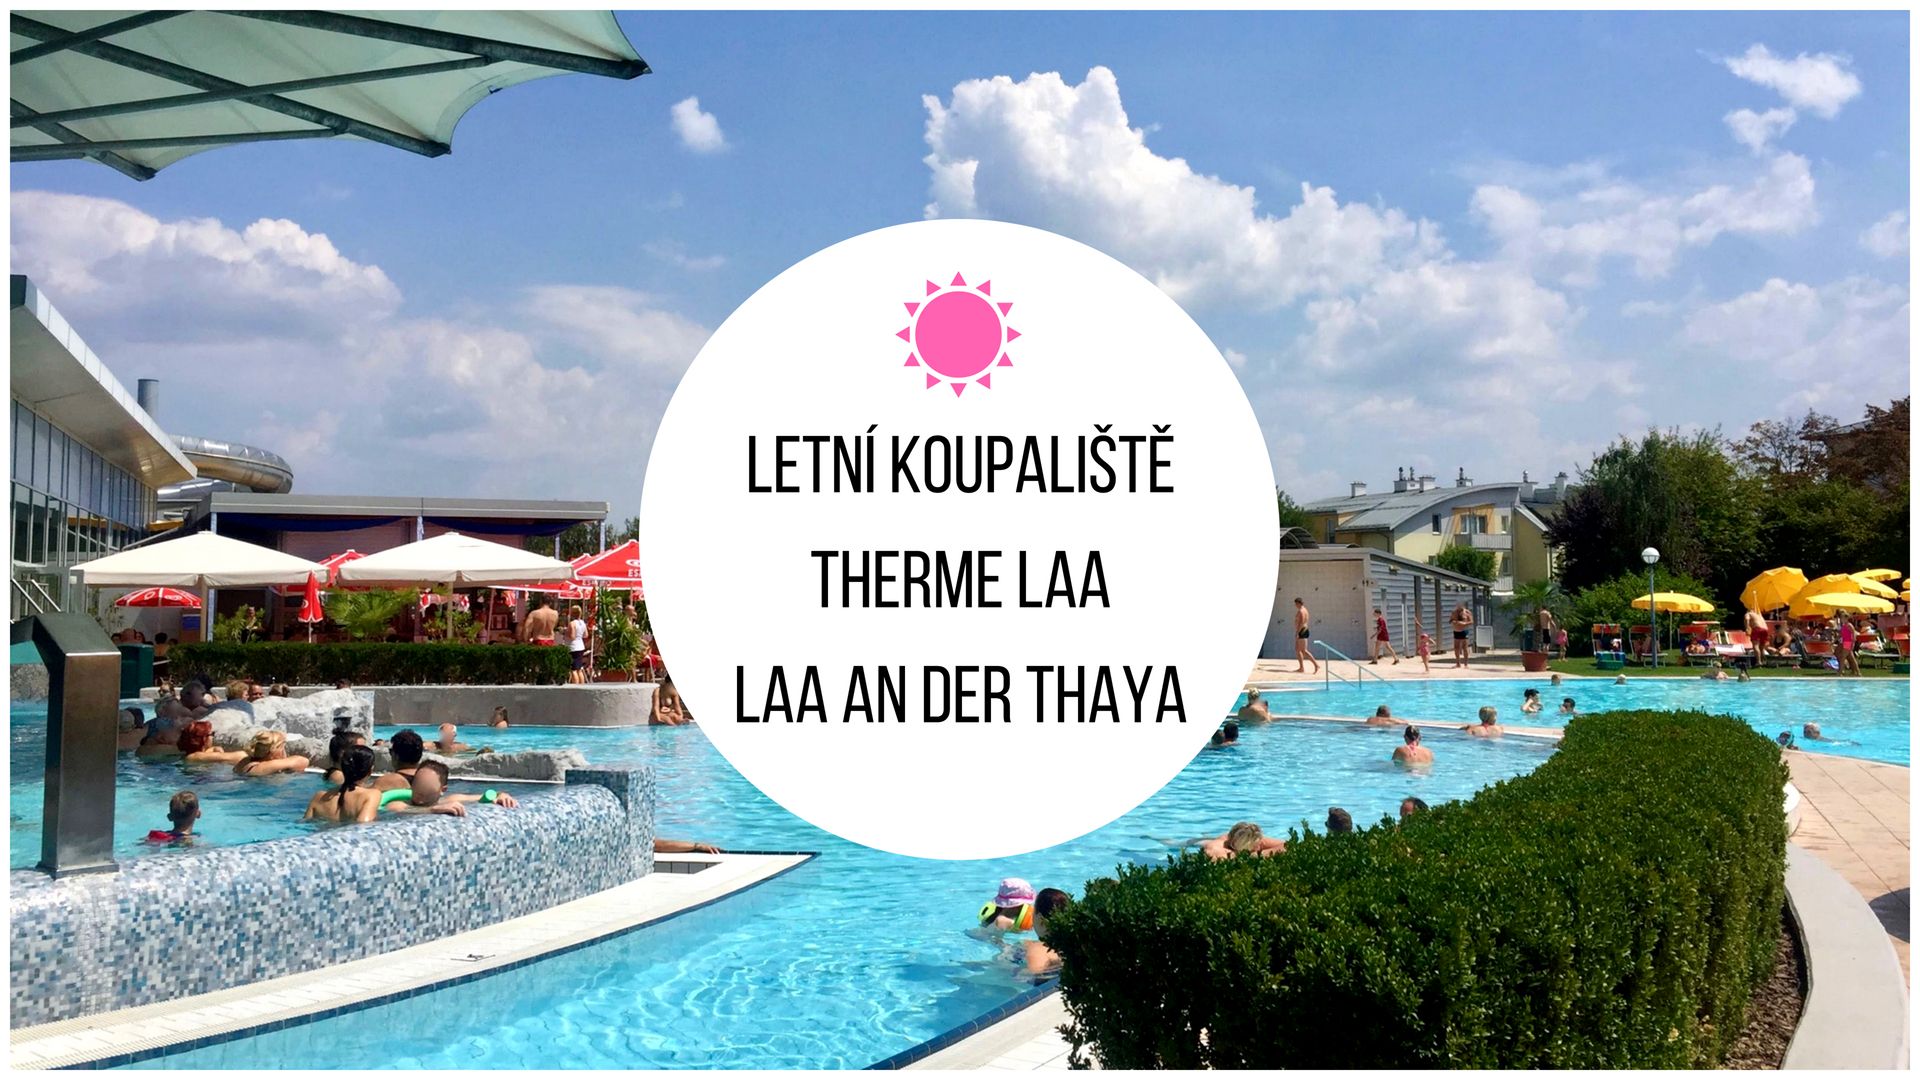 Letní koupaliště Therme Laa, Laa an der Thaya - recenze